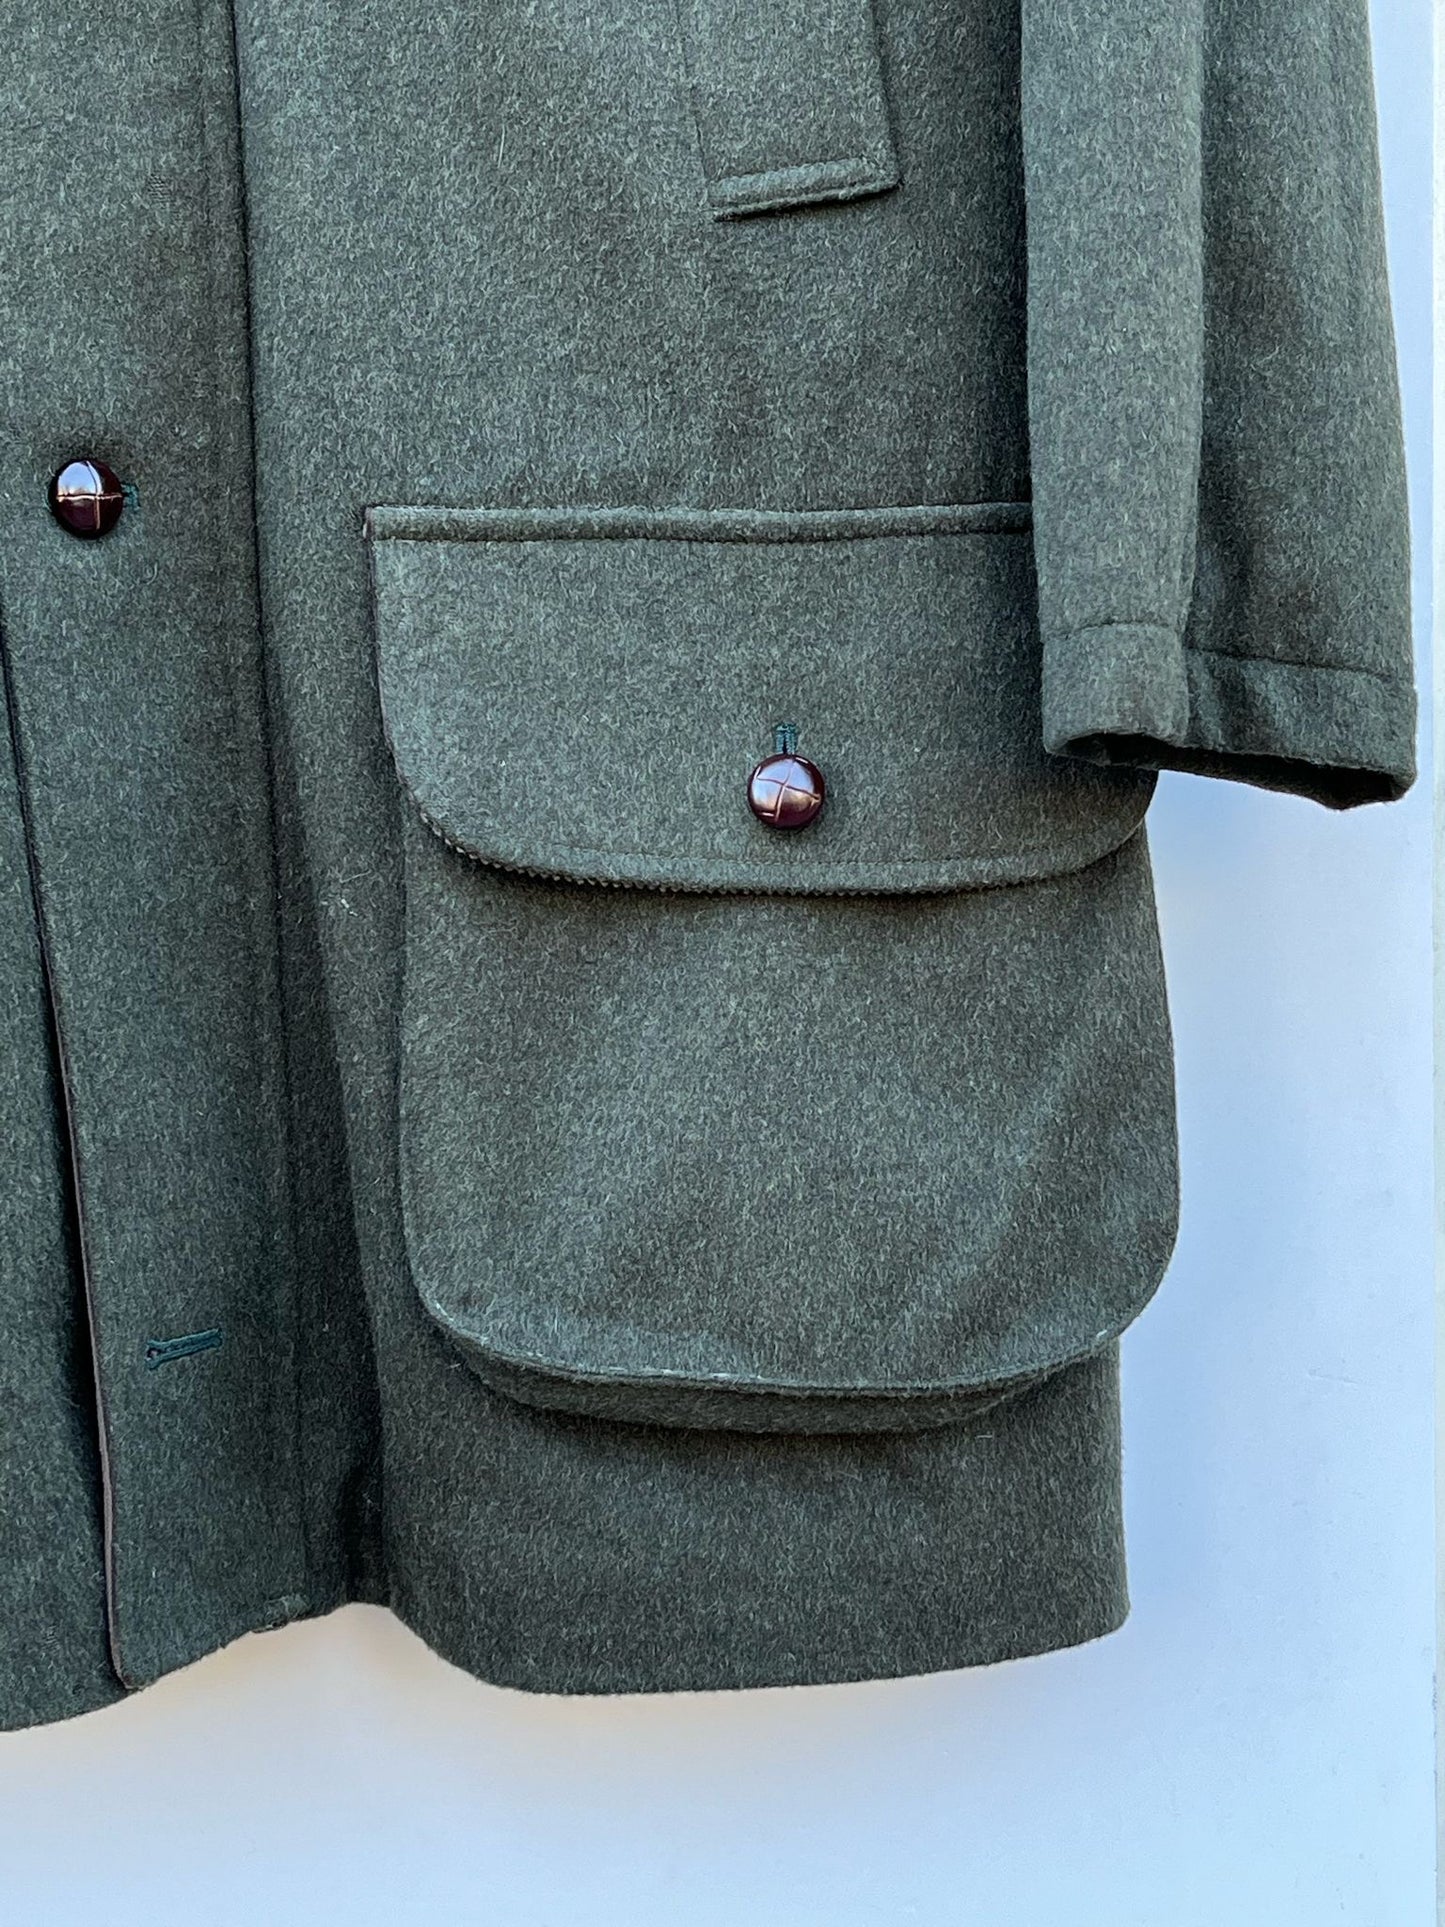 RARO Barbour Cappotto Loden in Lana verde Medium 48/50 Rare wool Loden vintage coat size M